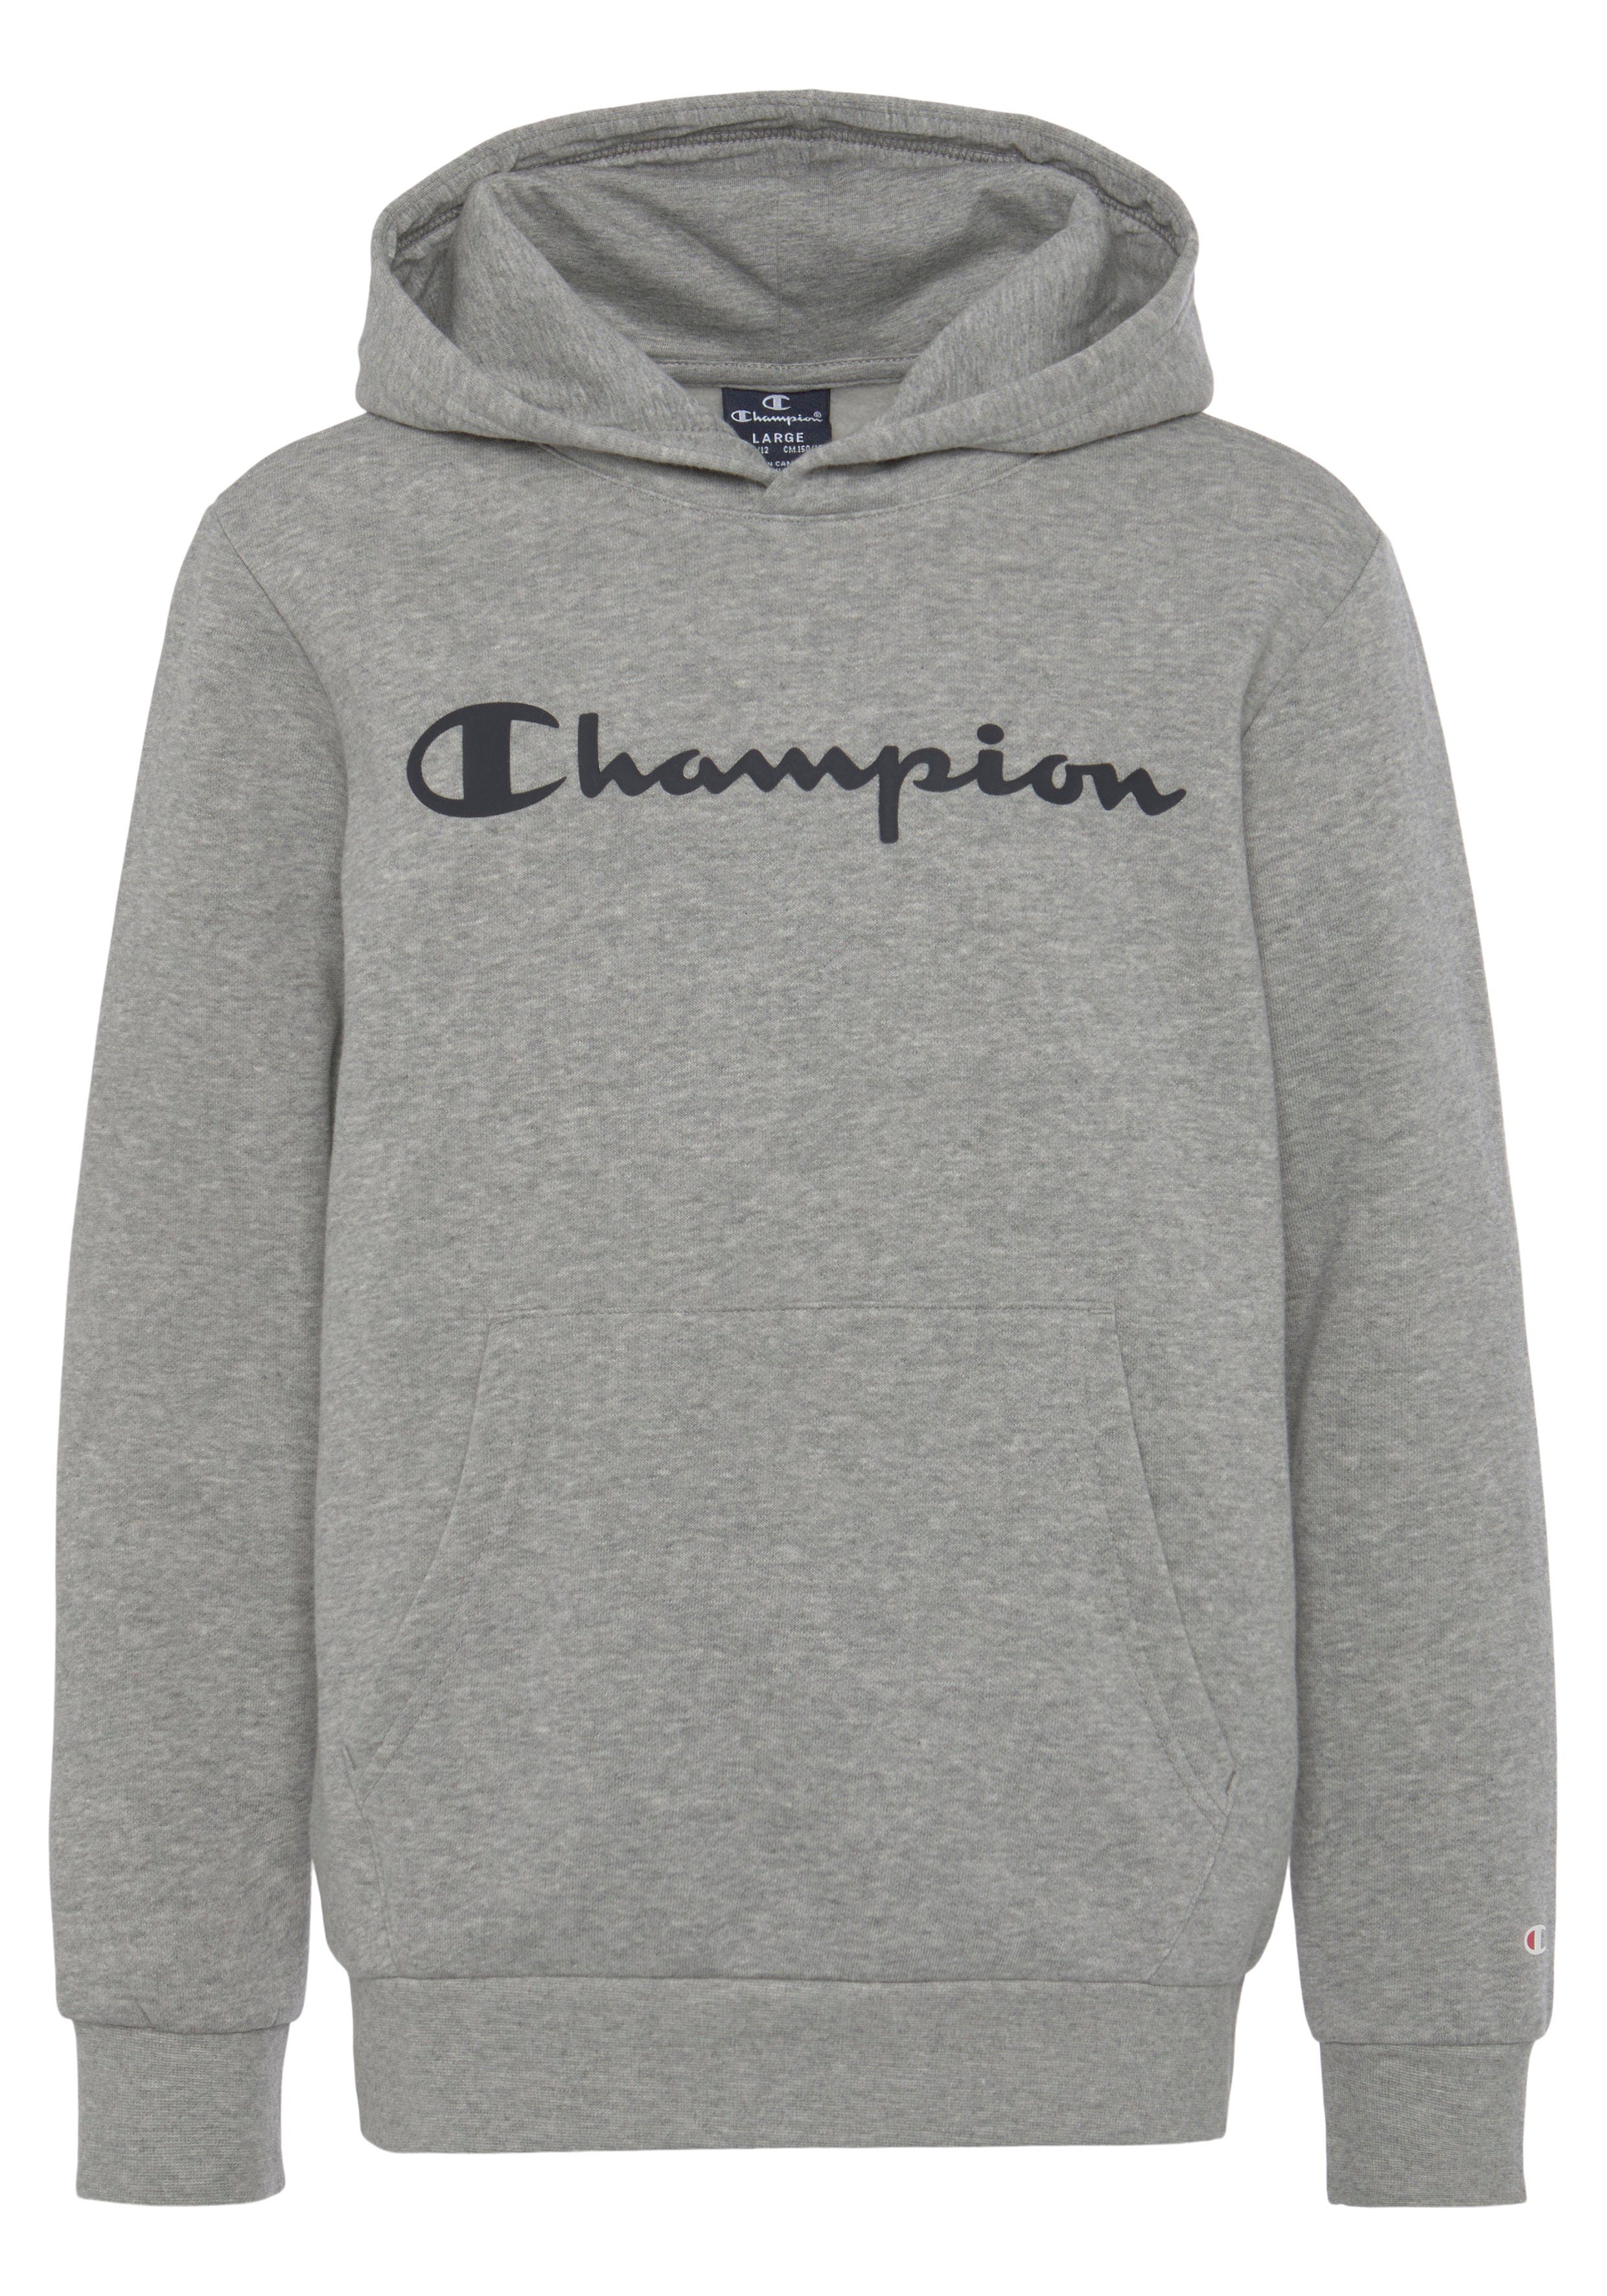 Champion Sweatshirt grau Hooded Kapuzensweatshirt